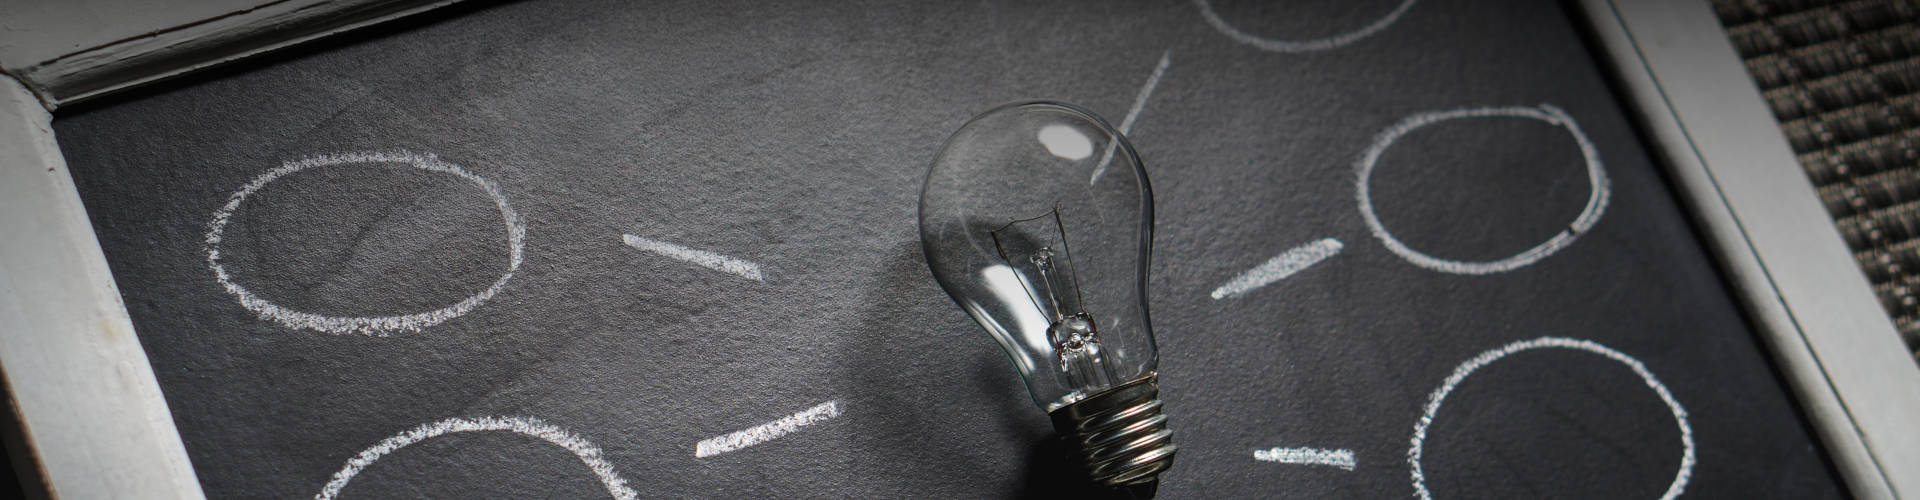 Light bulb placed on a blackboard